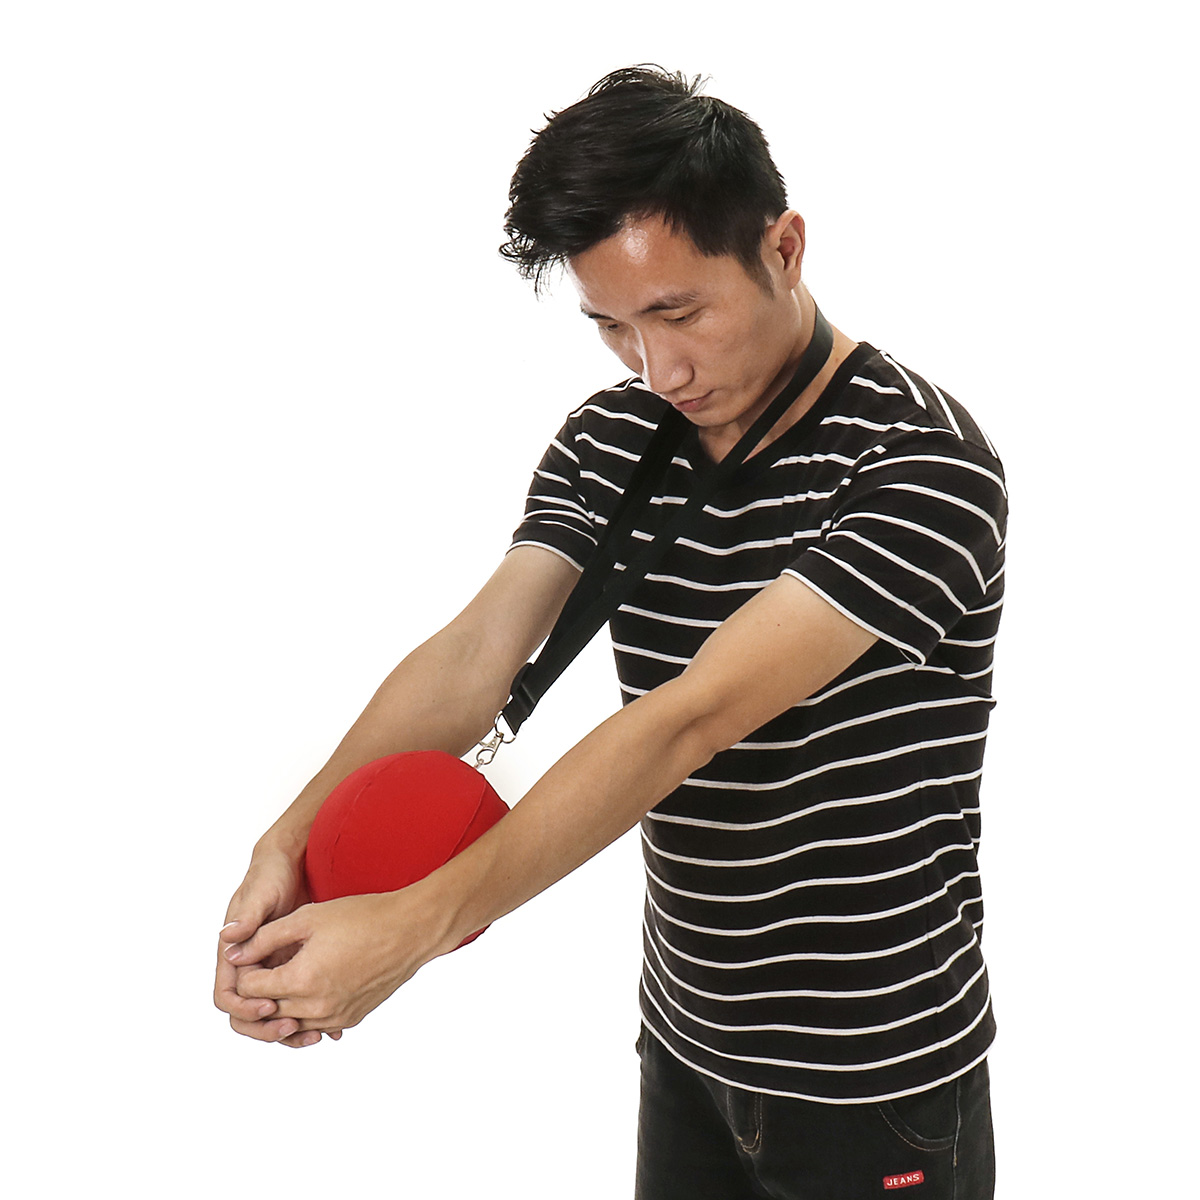 Golf-Impact-Ball-Golf-Swing-Trainer-Aid-Assist-Posture-Corrector-Supplies-1476814-10